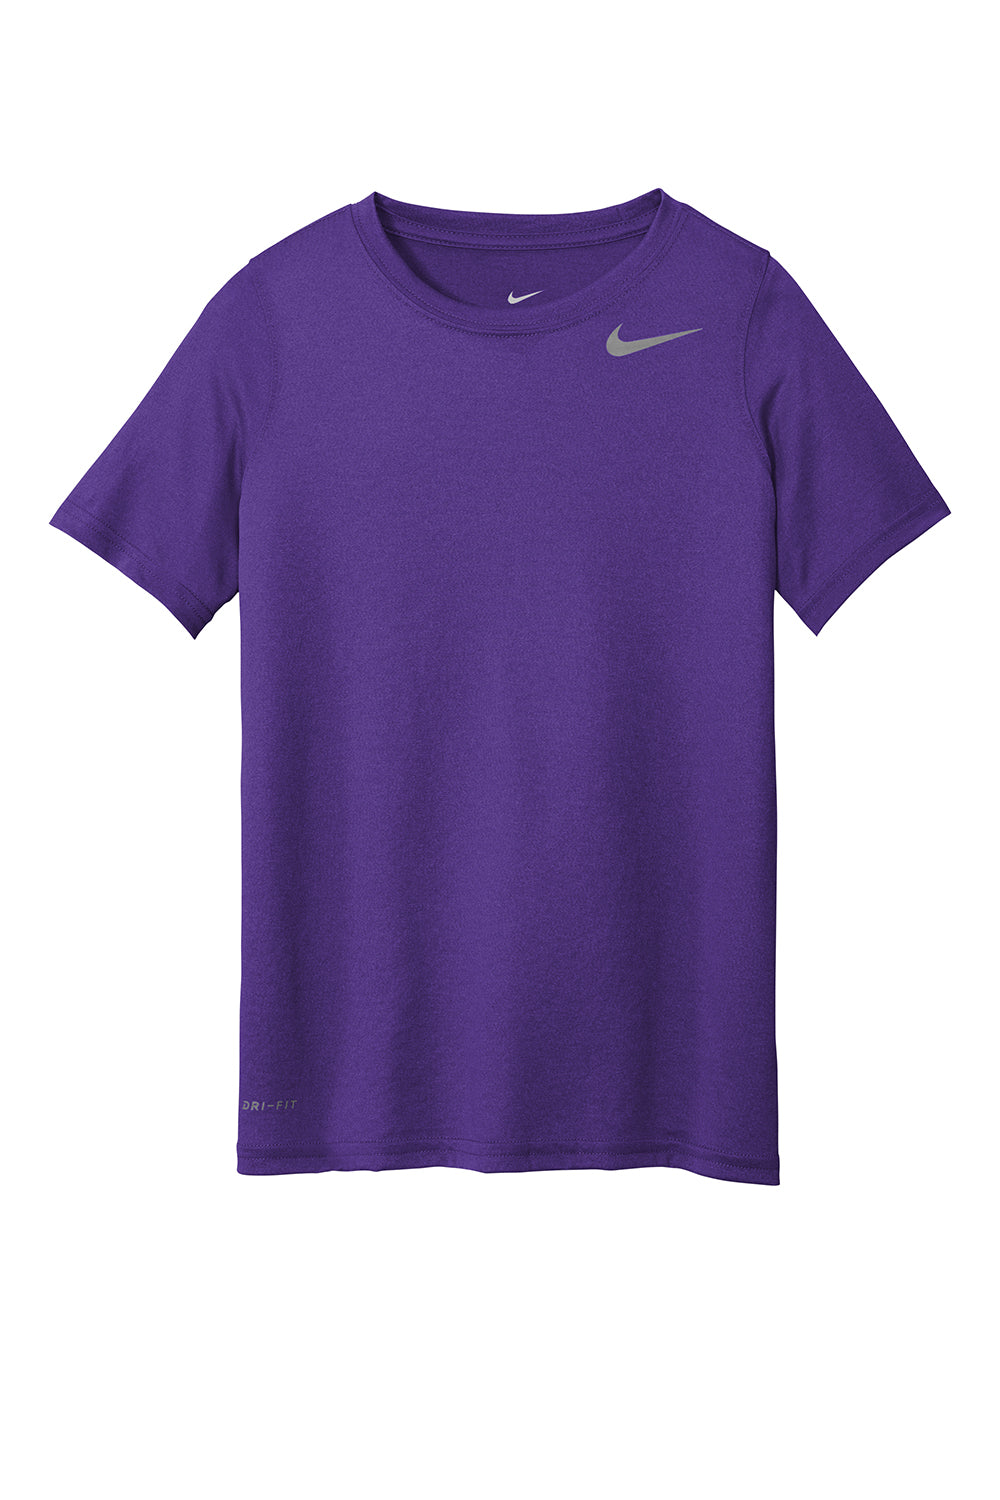 Nike DV7317 Youth Team rLegend Dri-Fit Moisure Wicking Short Sleeve Crewneck T-Shirt Court Purple Flat Front